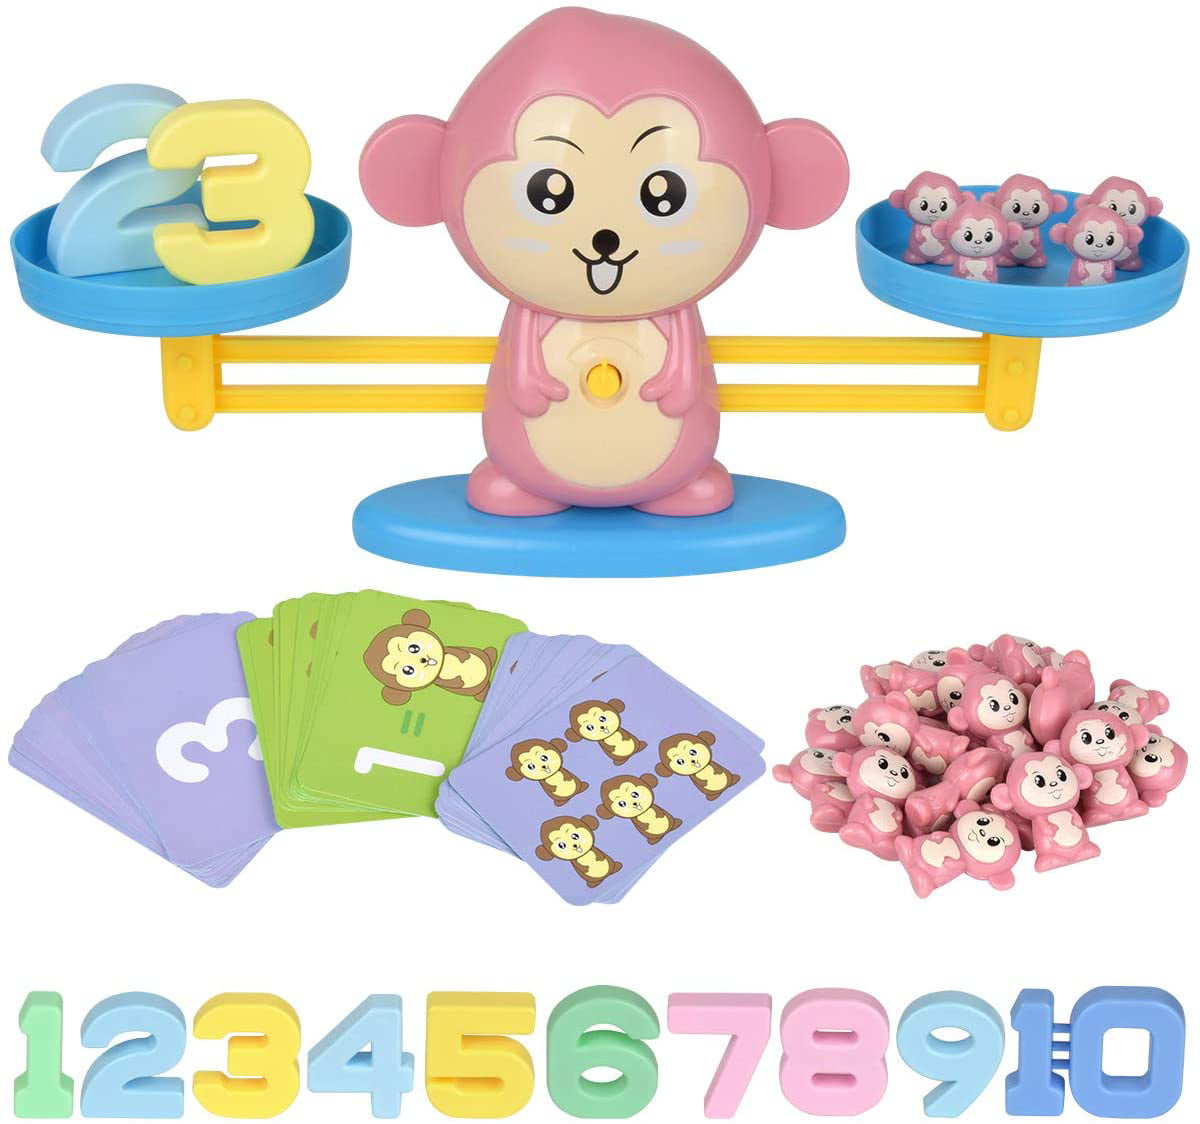 Educational Toy Gift for Kids UK Monkey Balance Cool Math Game Fun Learning 